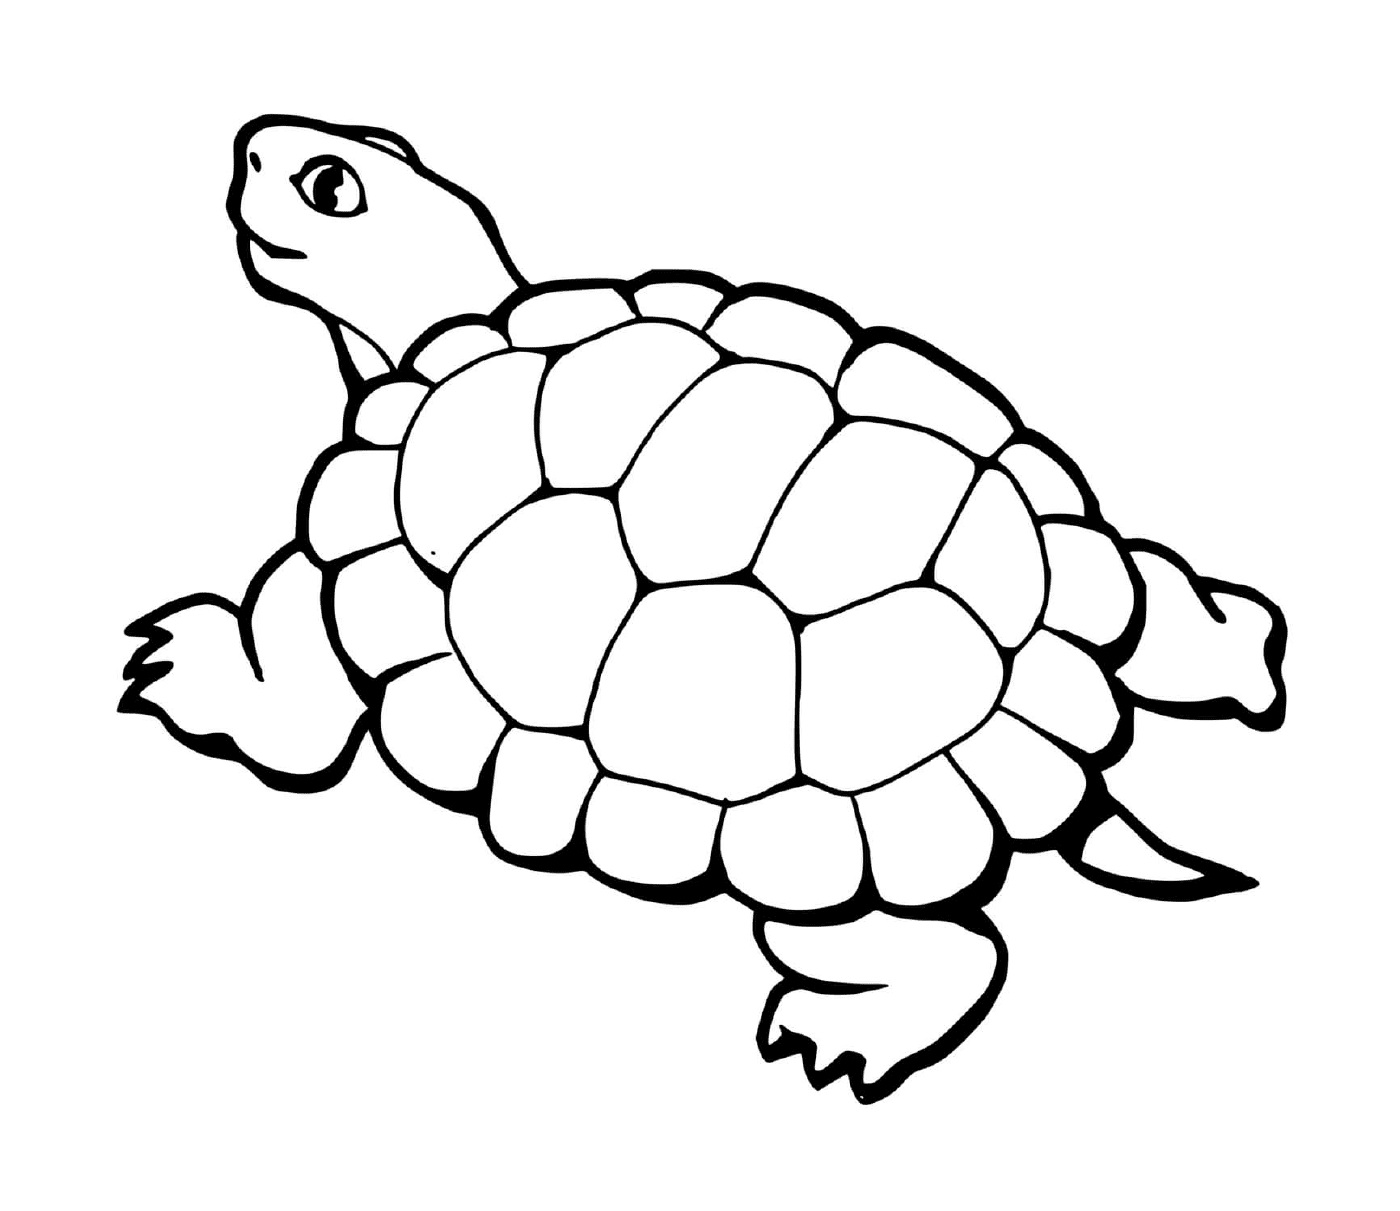 tortue avec queue